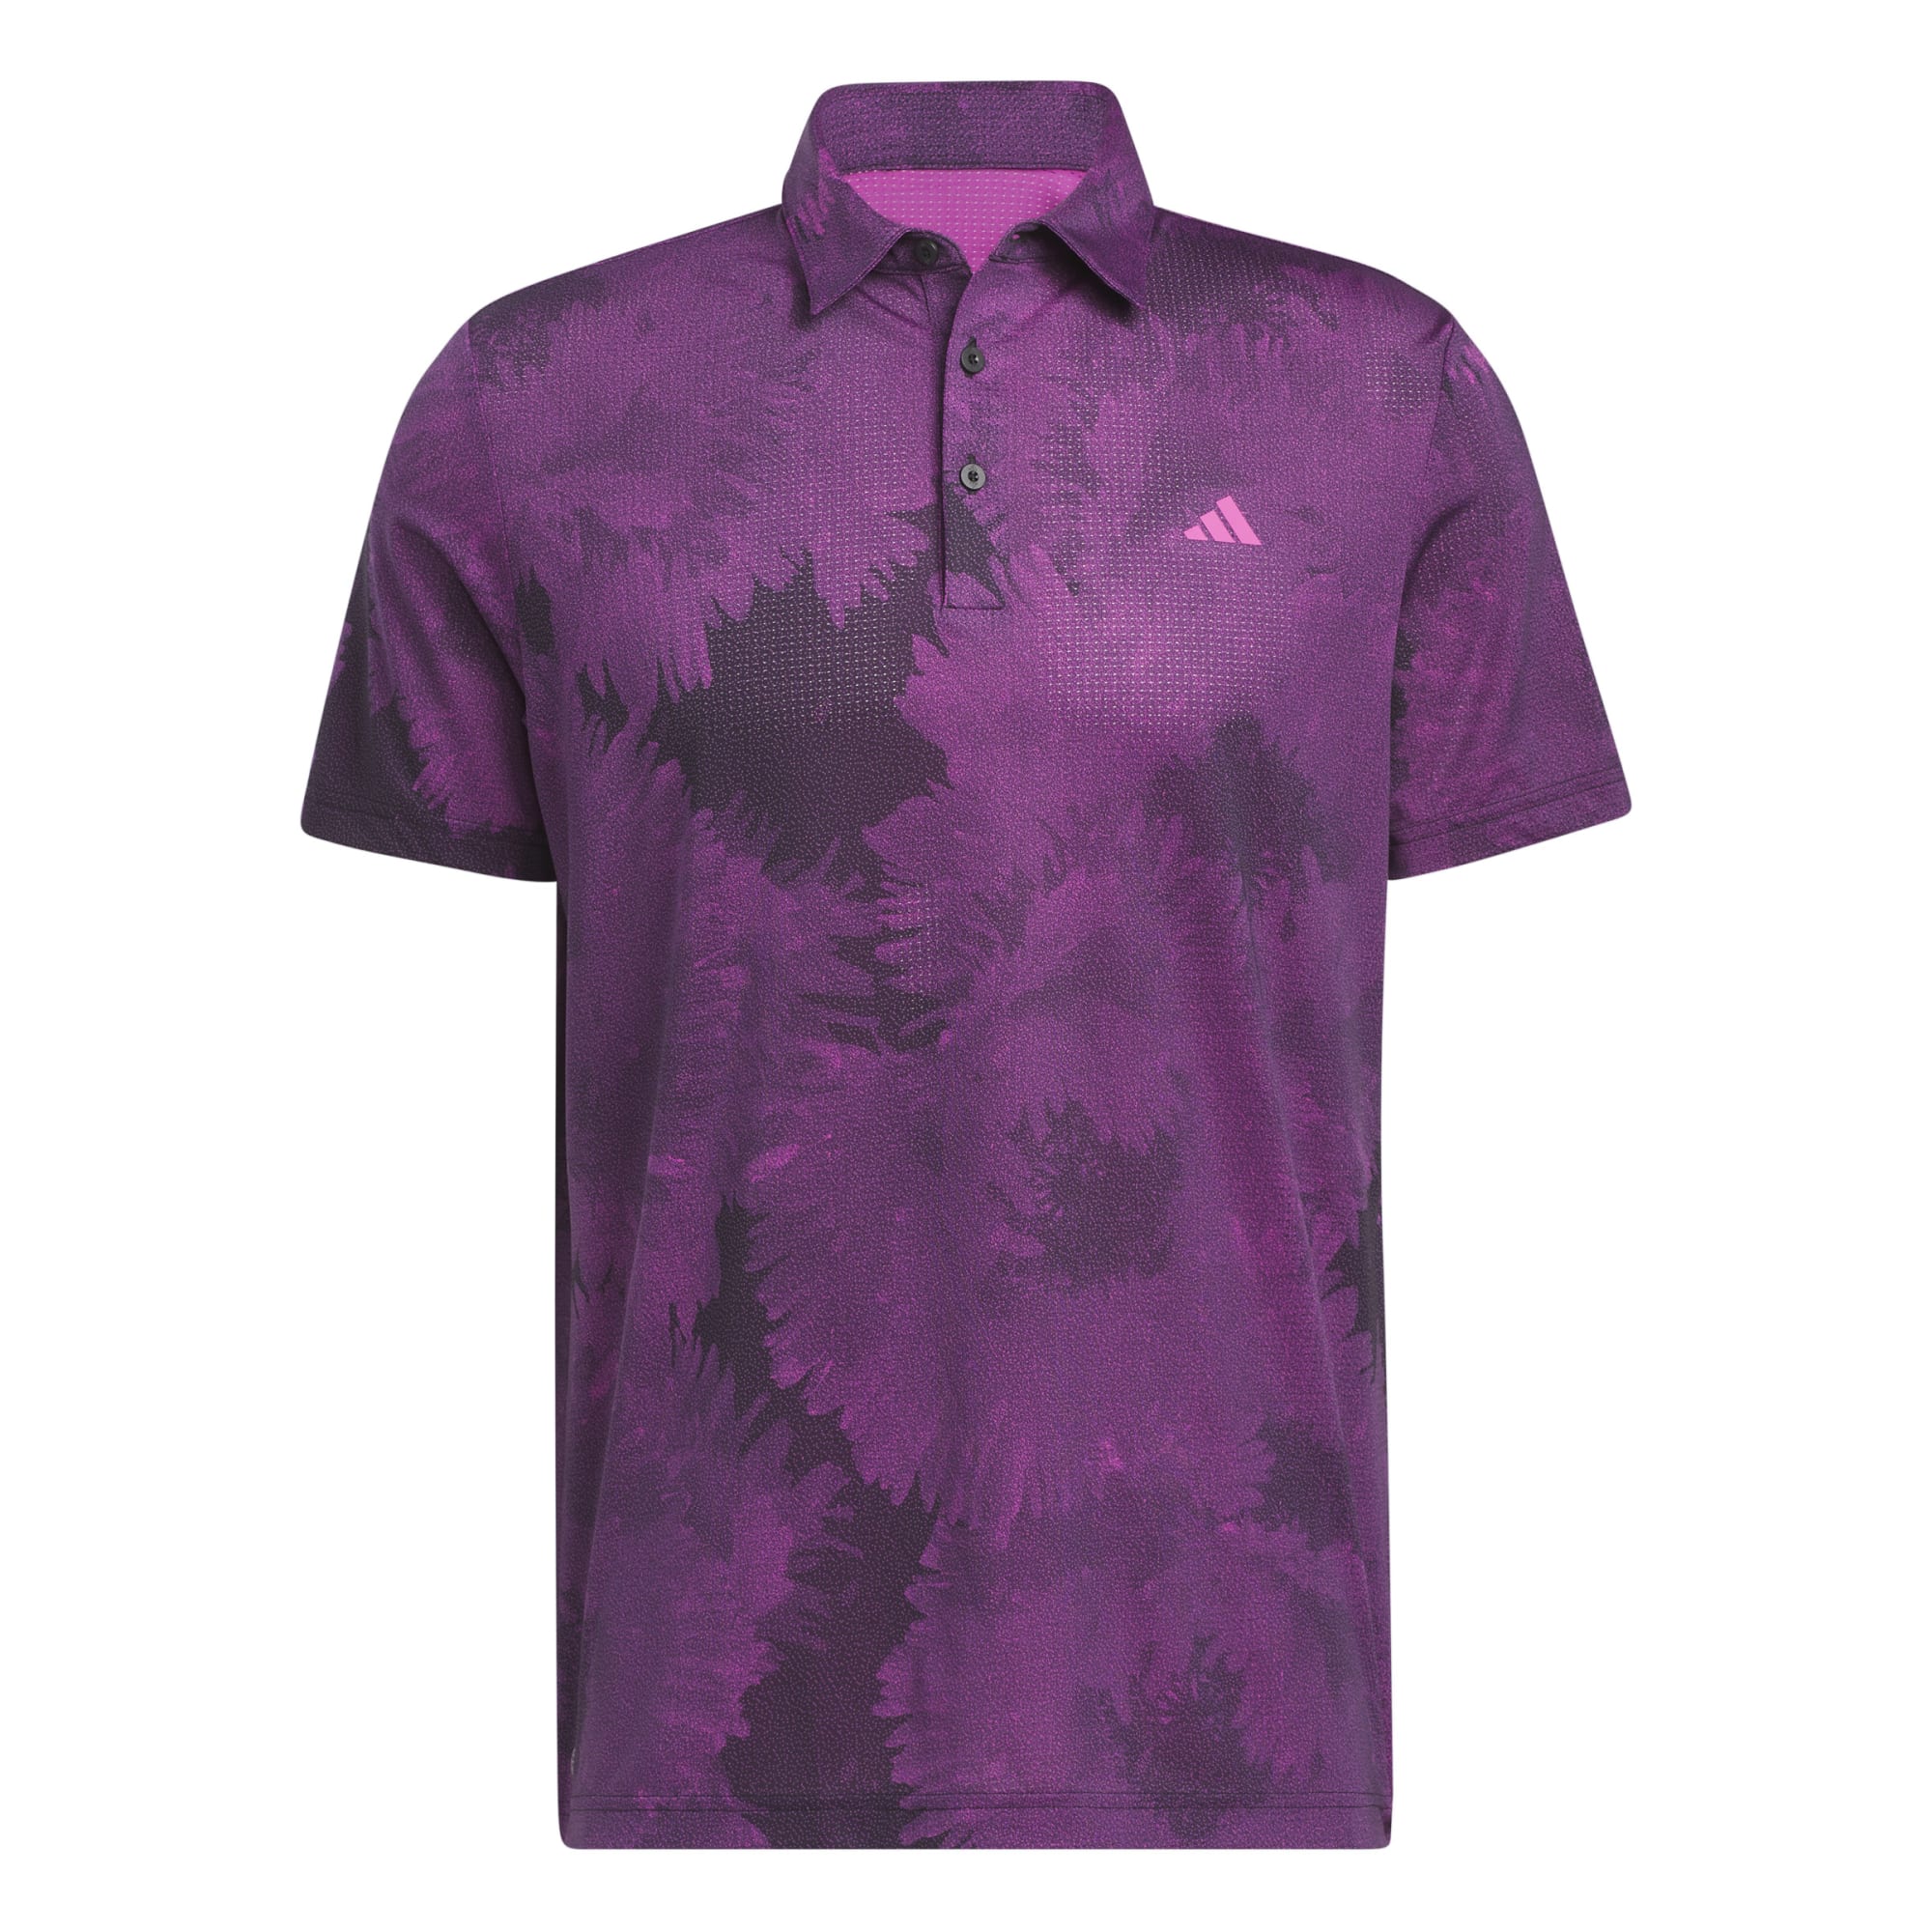 adidas Golf Flower Mesh Print Mens Polo Shirt  - Black/Lucid Fuchsia